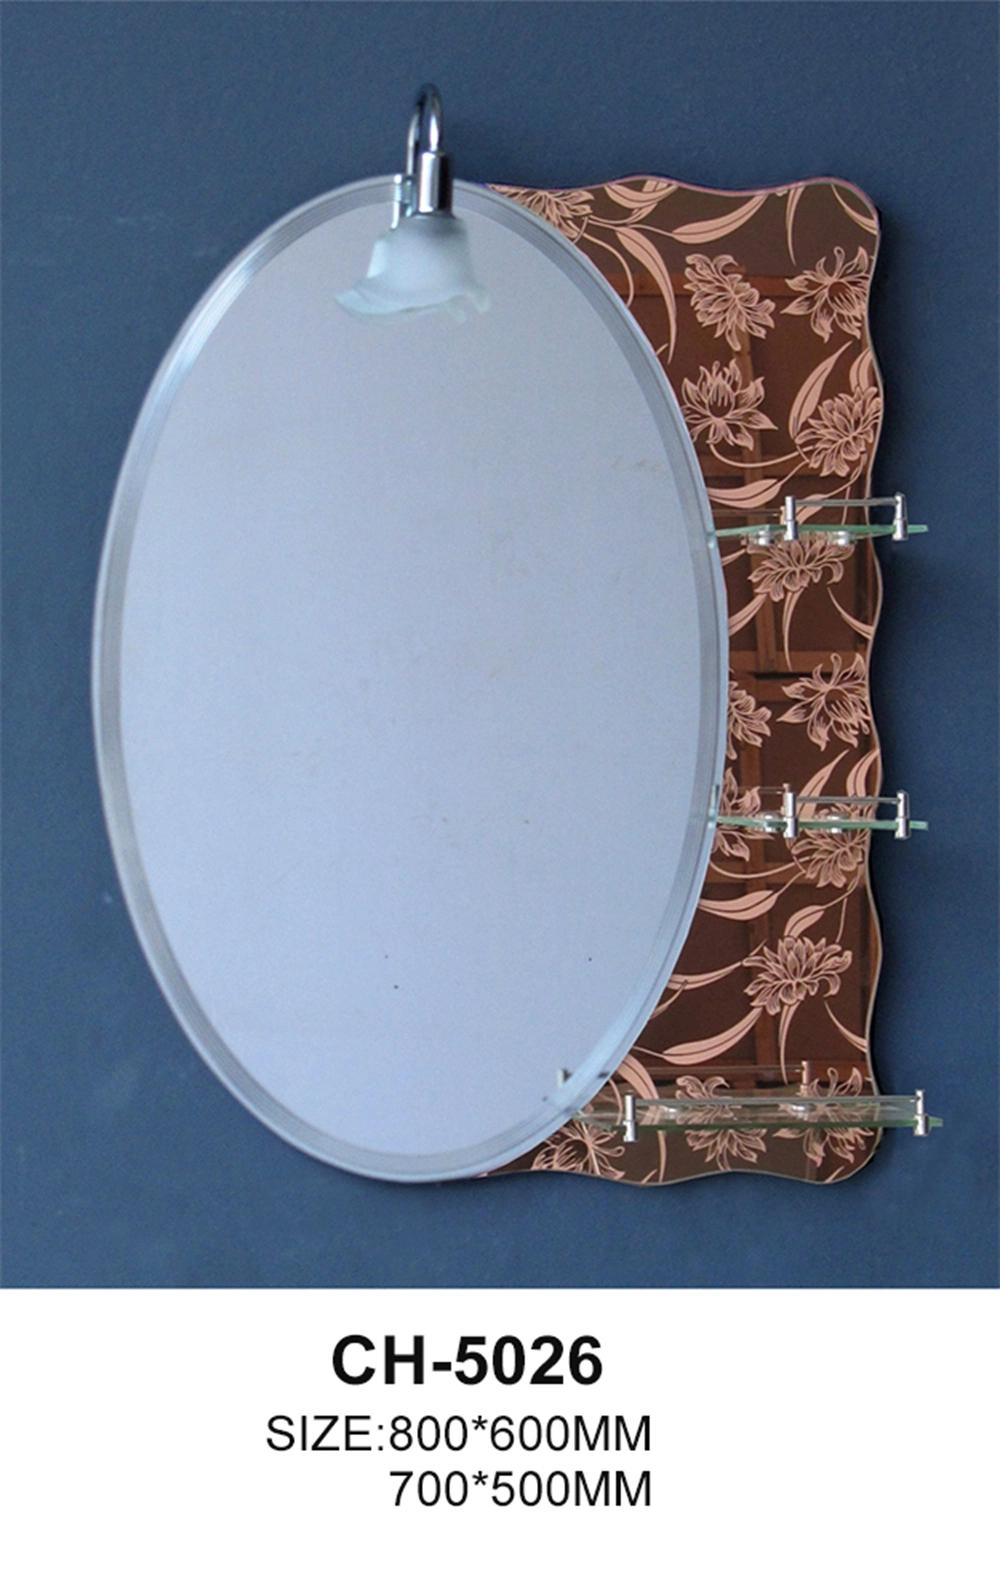 Single Silver Furniture Vanity Float Bathroom Glass Wall Mirror Espejo